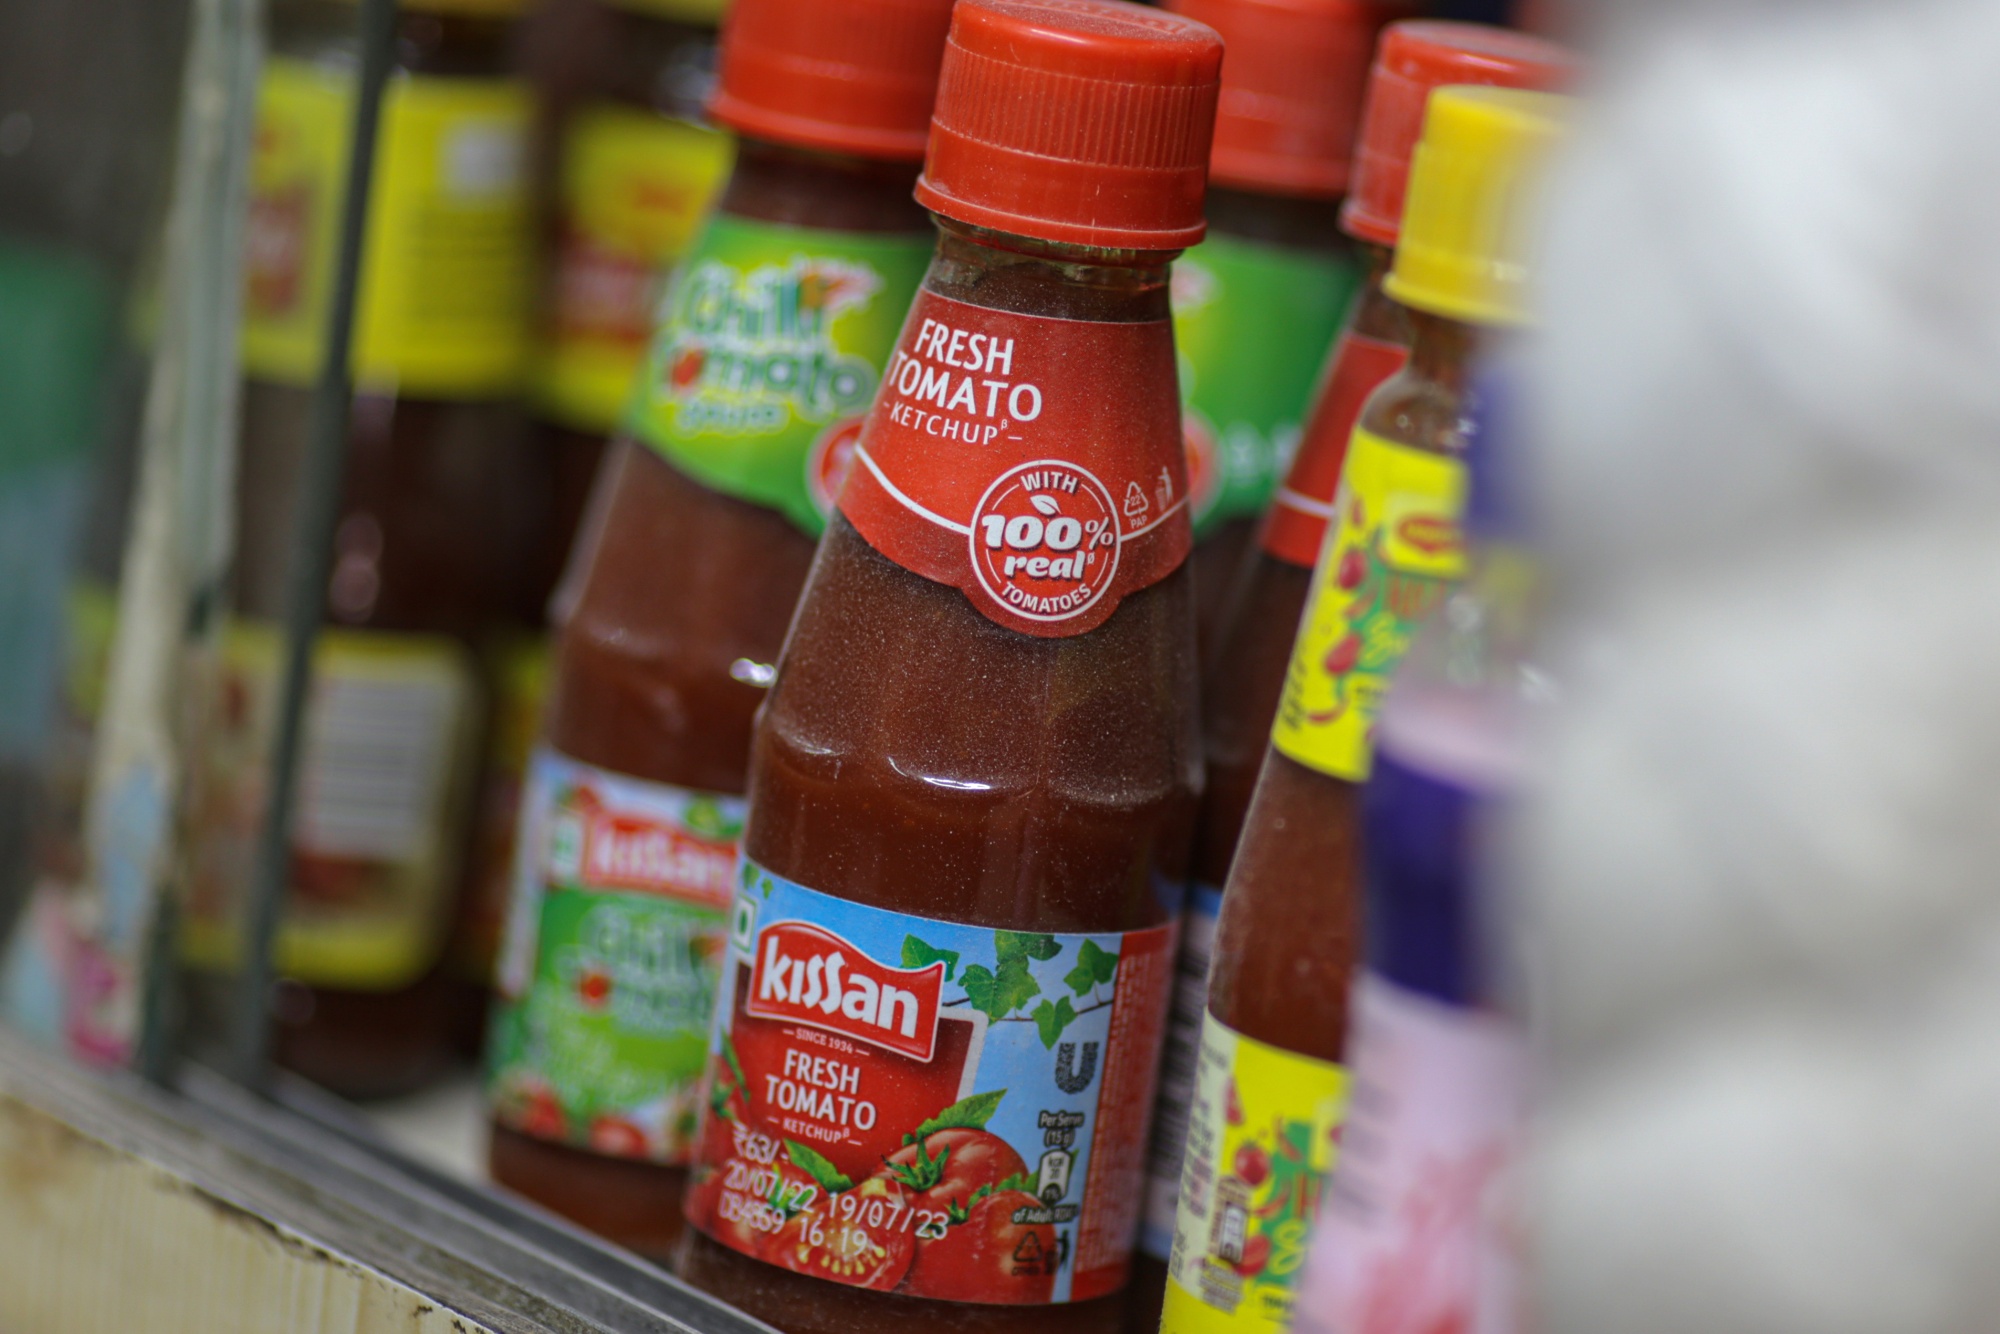 Kissan Sauce Maker, India's First DIY Tomato Sauce